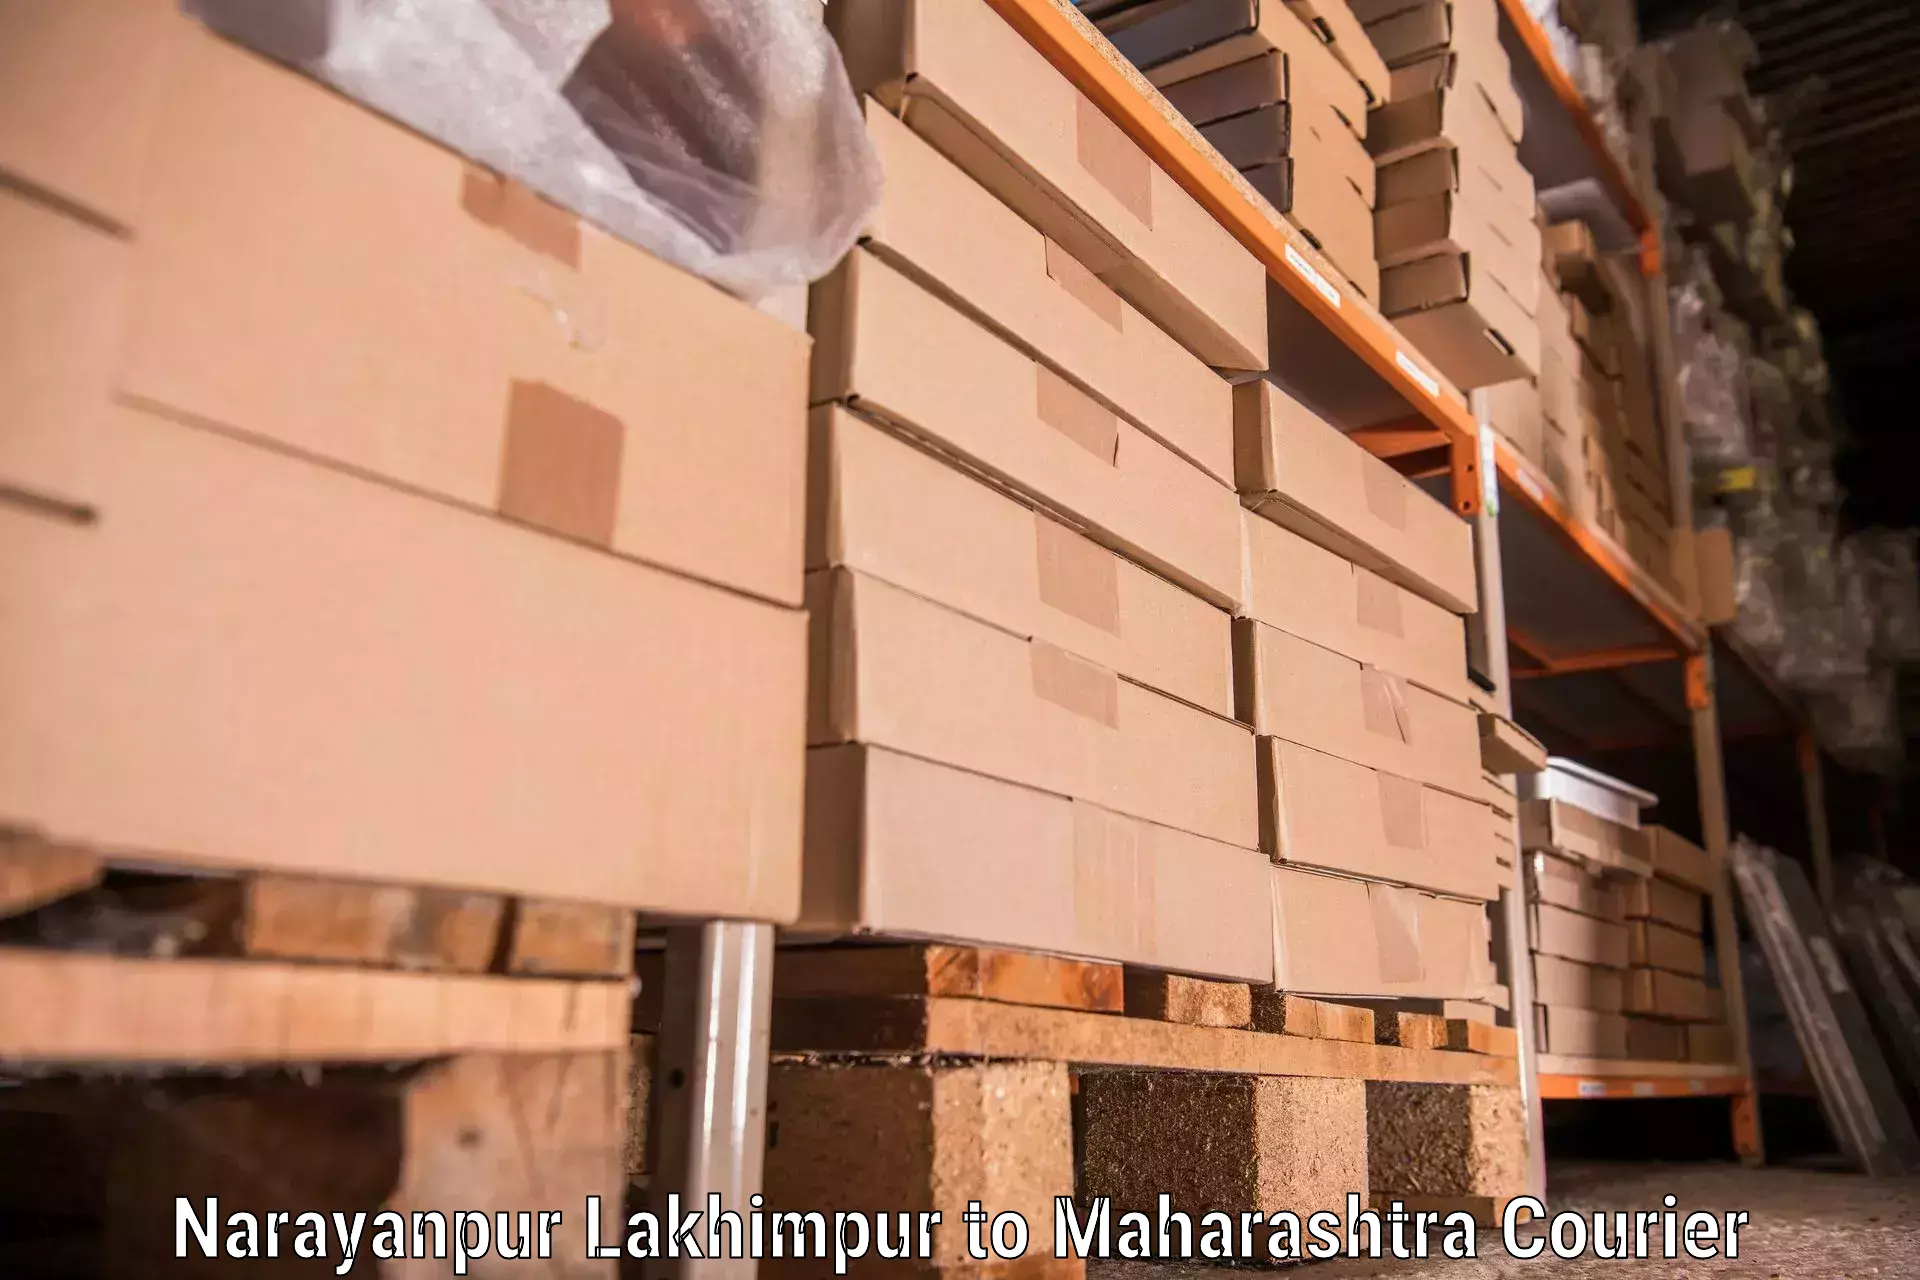 Reliable movers Narayanpur Lakhimpur to Bhokar